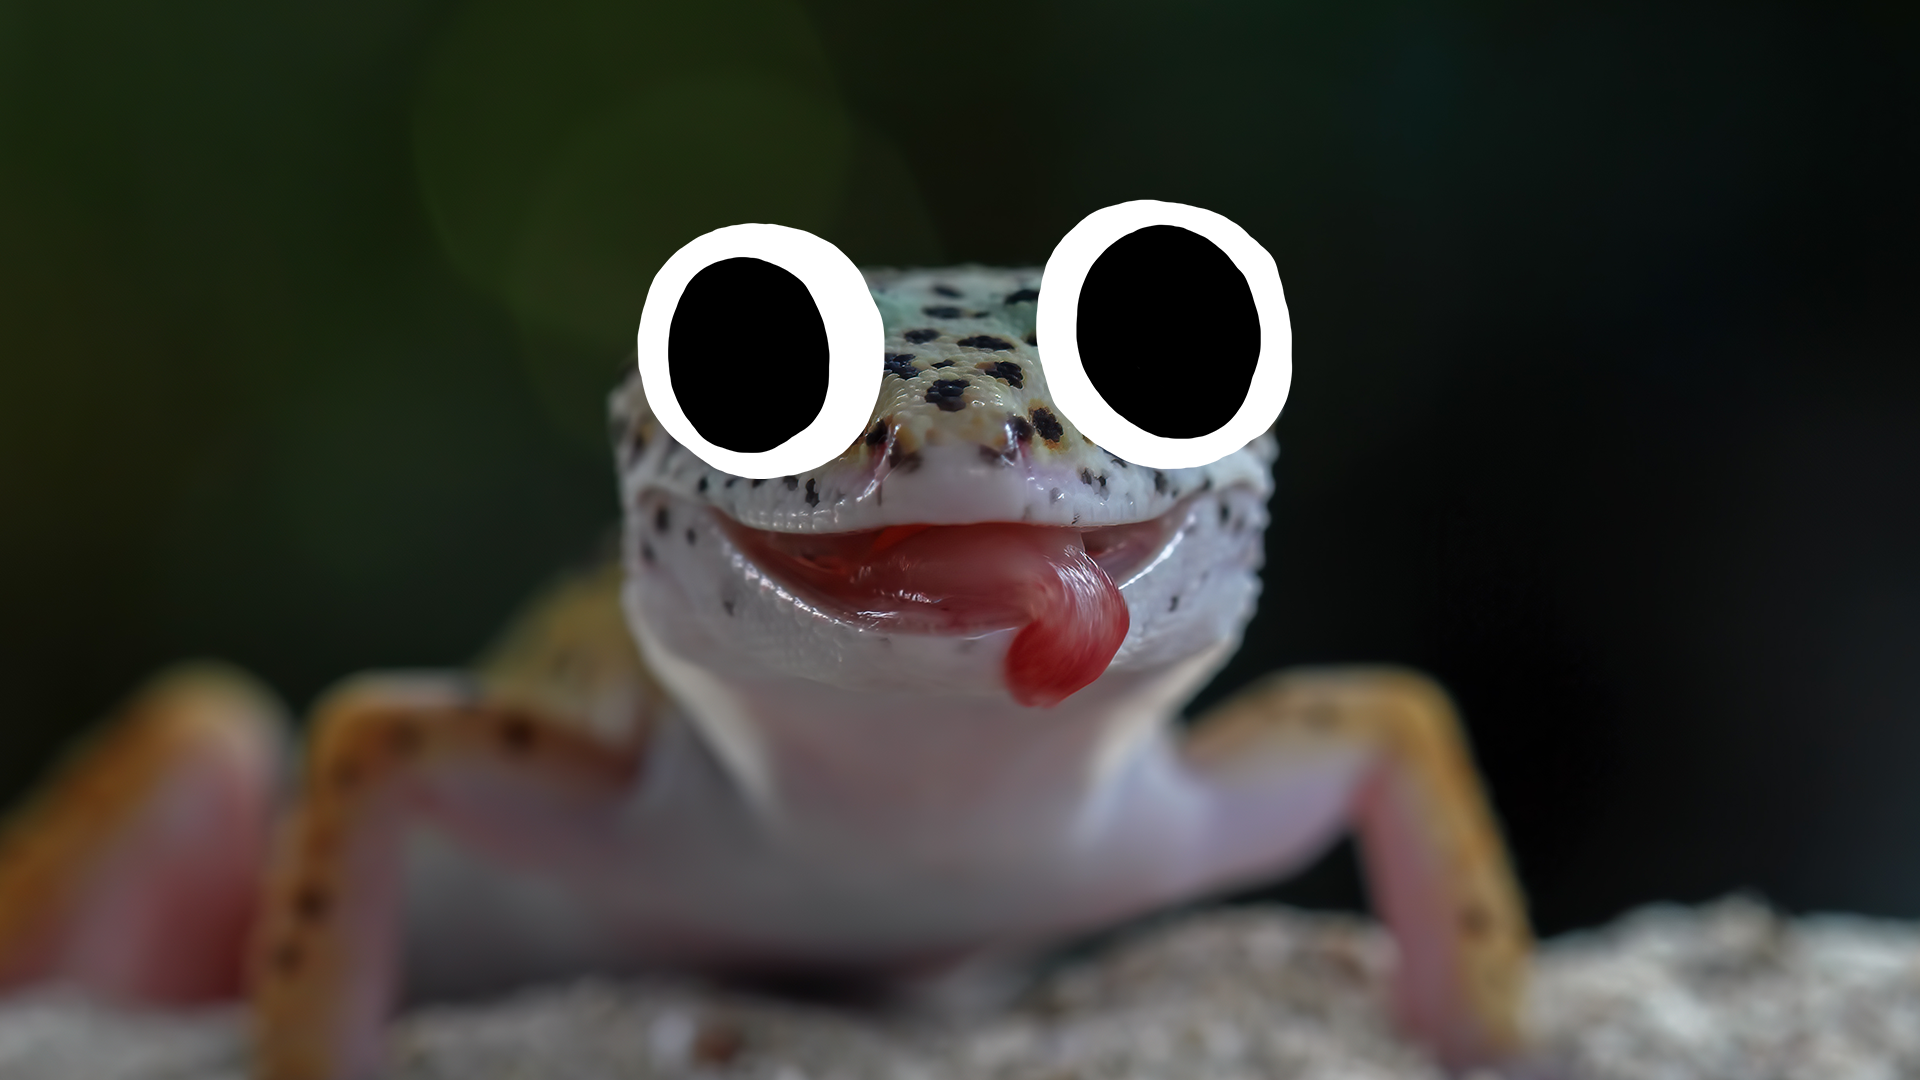 A lizard sticks its tongue out